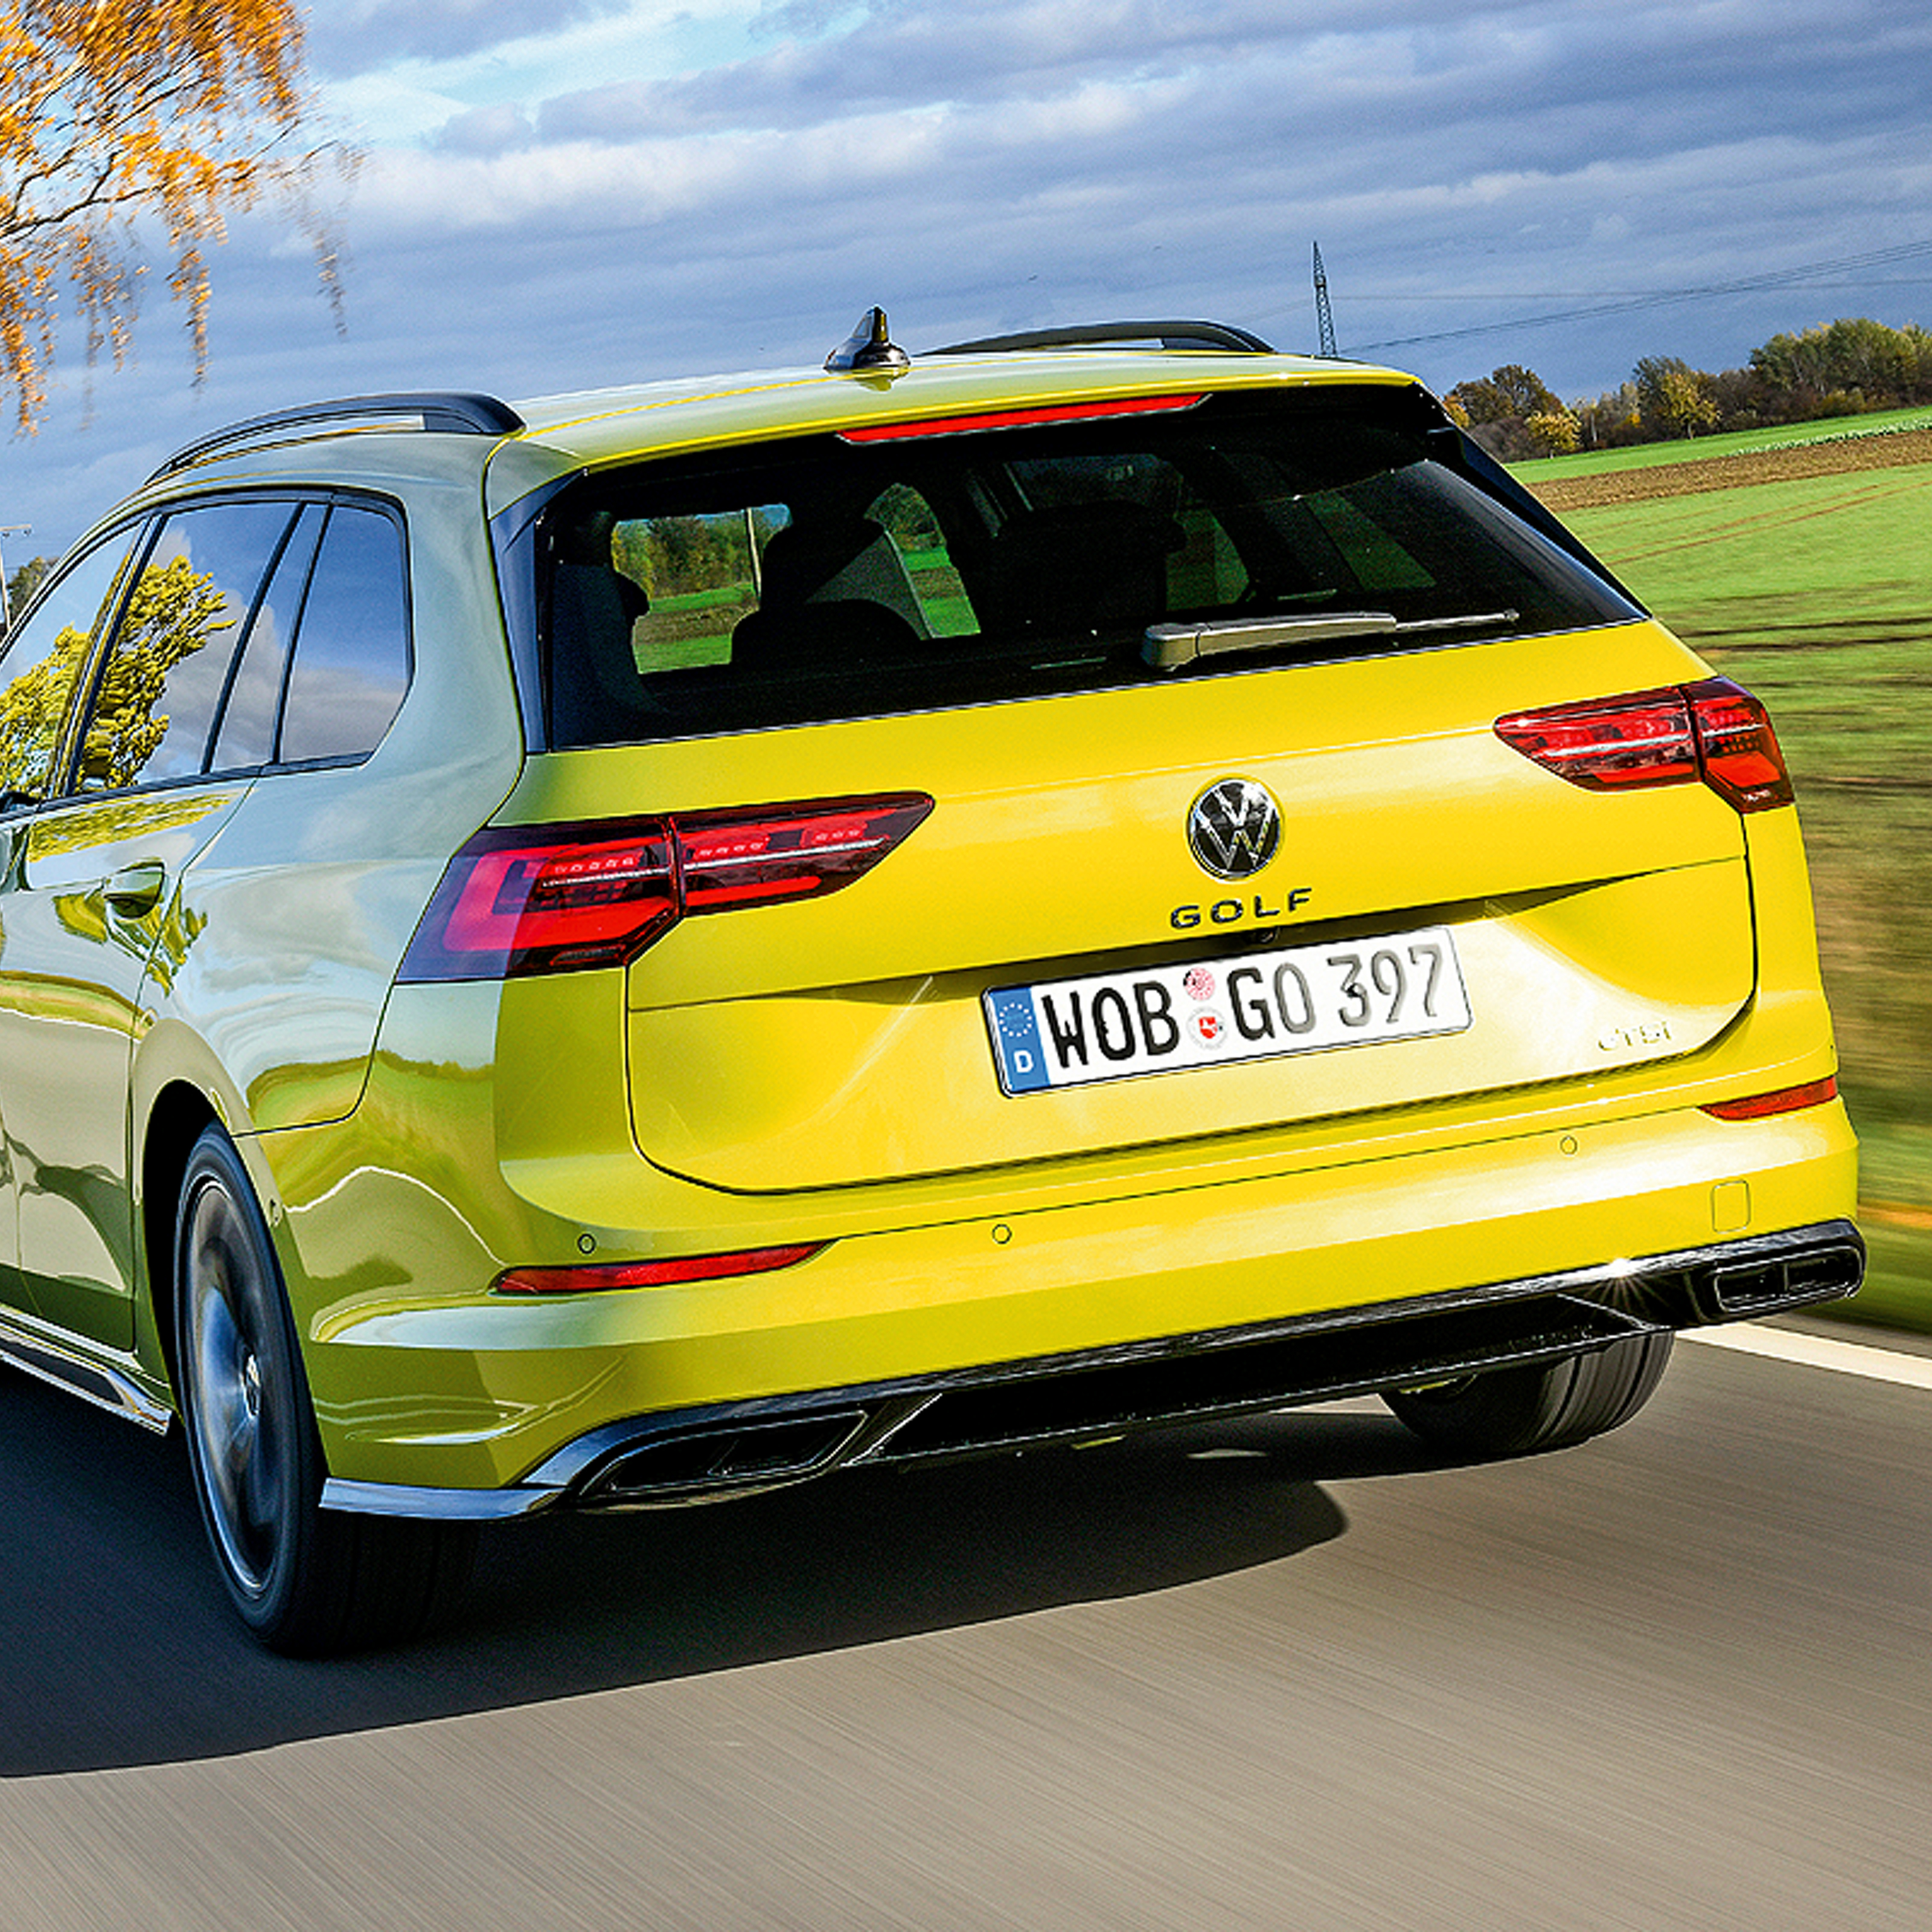 VW Golf R Variant (2021): Fahrbericht, Motor, Preis - AUTO BILD